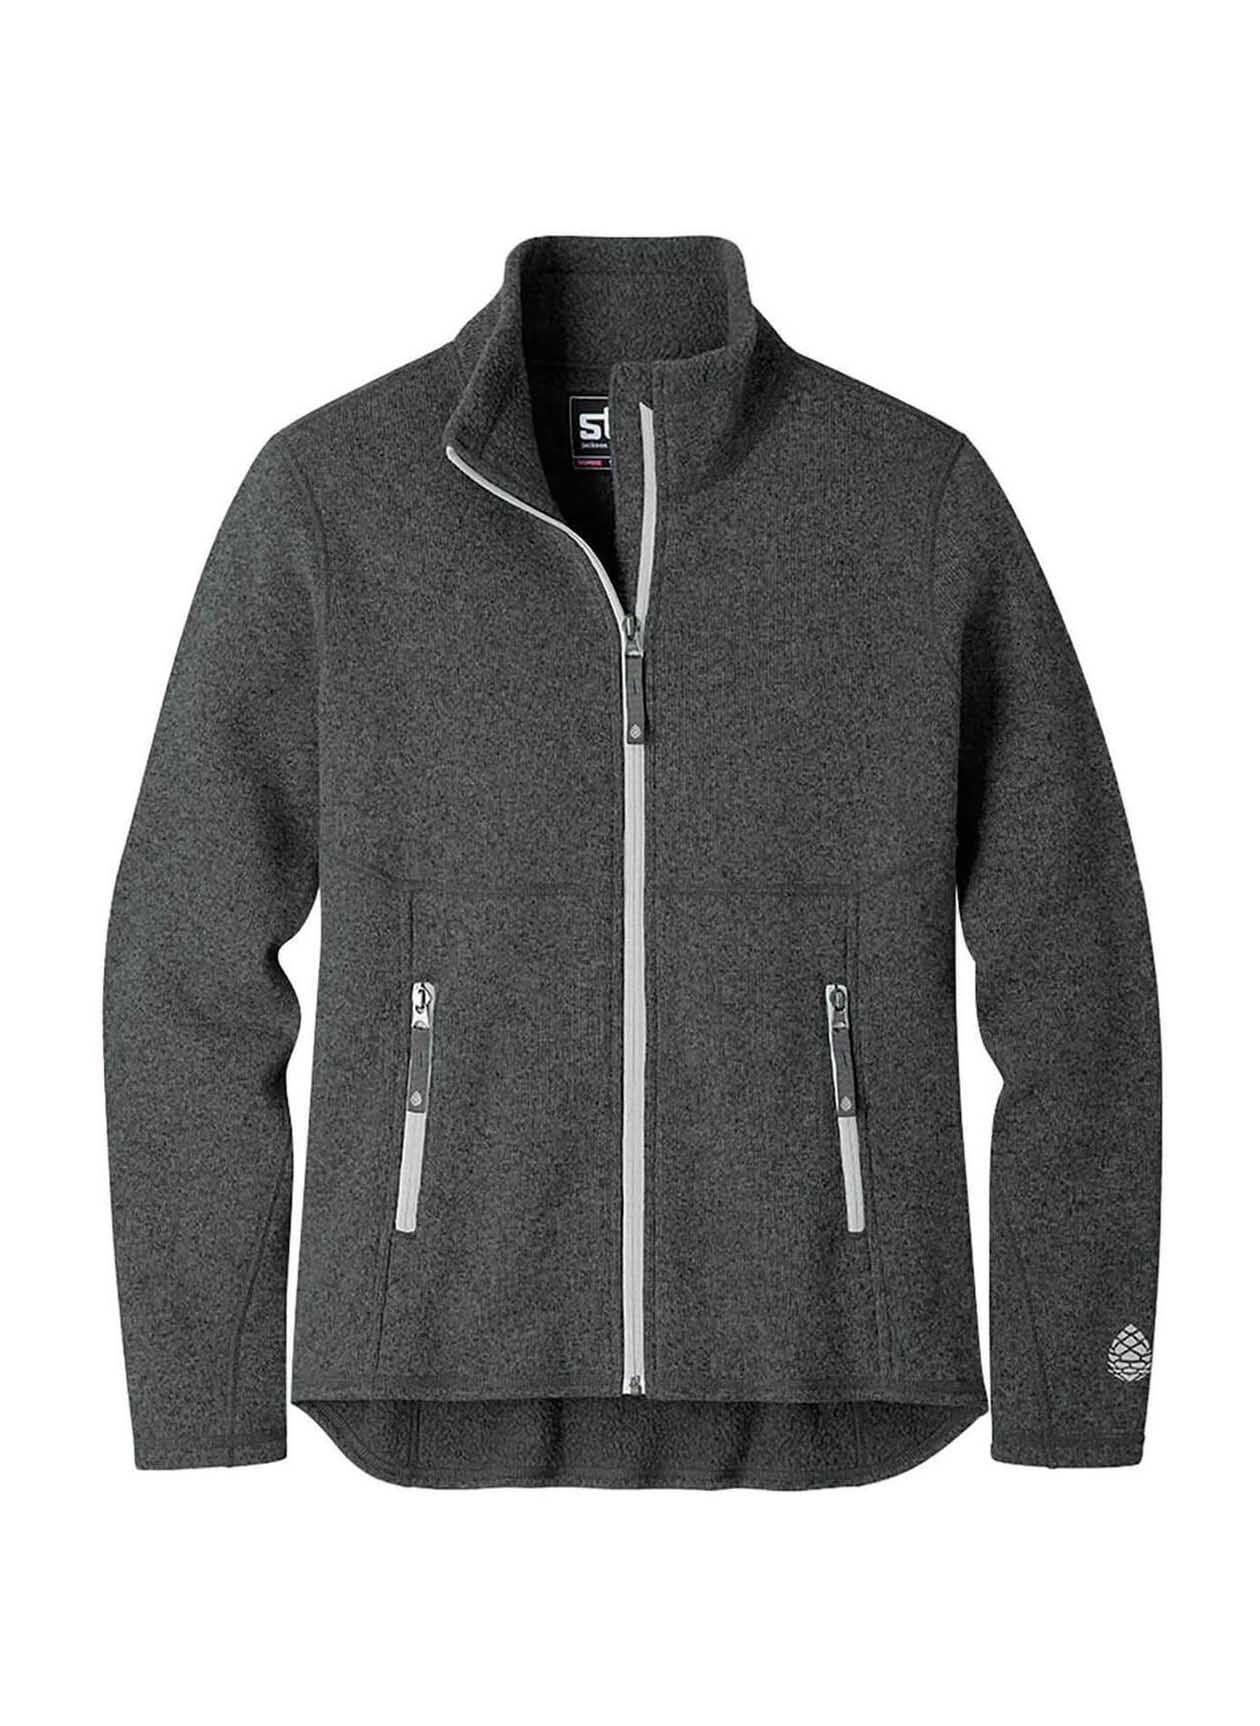 STIO Women's Sweetwater Fleece Jacket